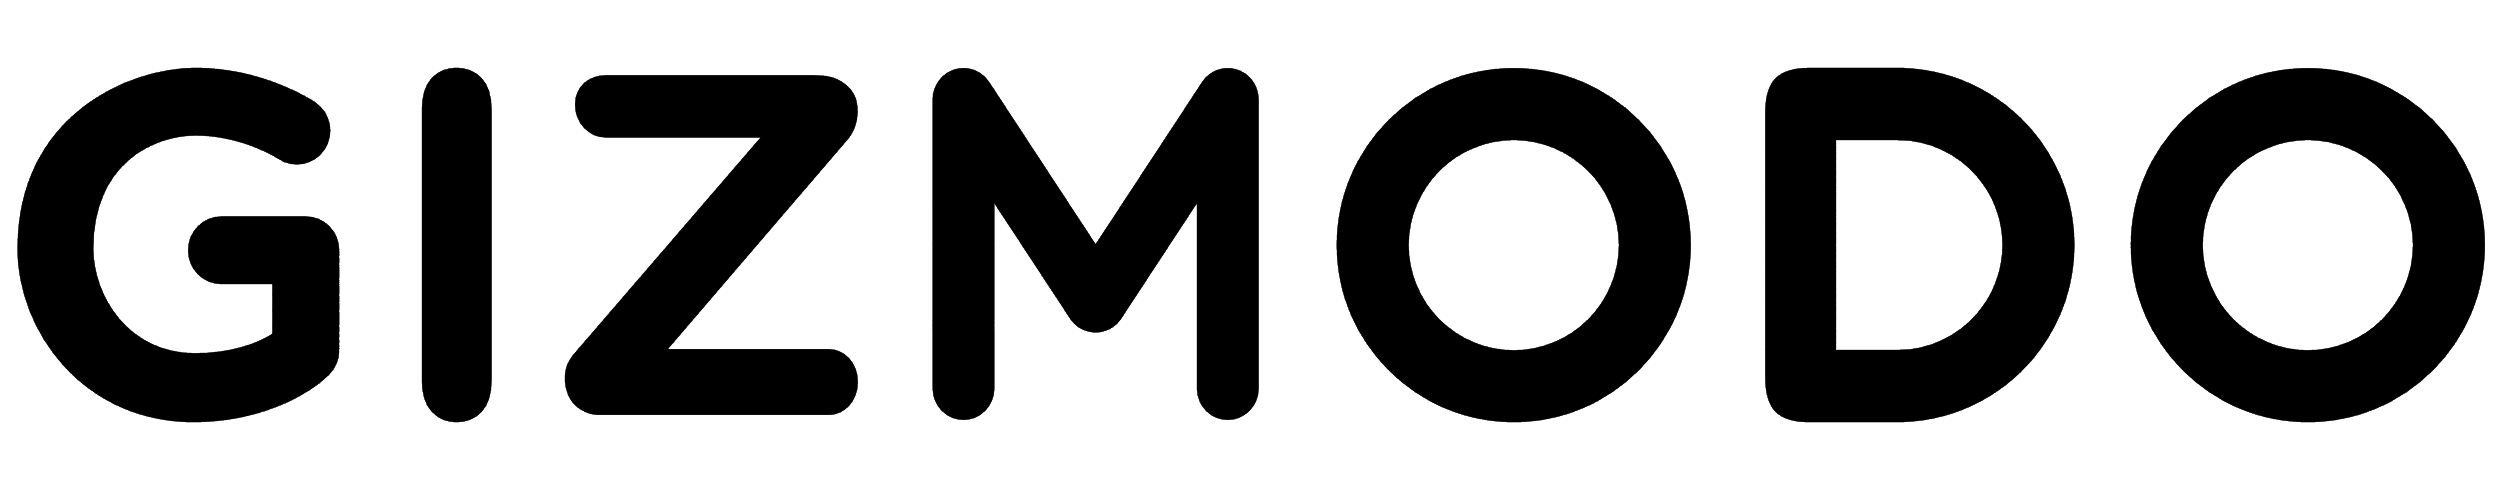 Gizmodo logo, logotype